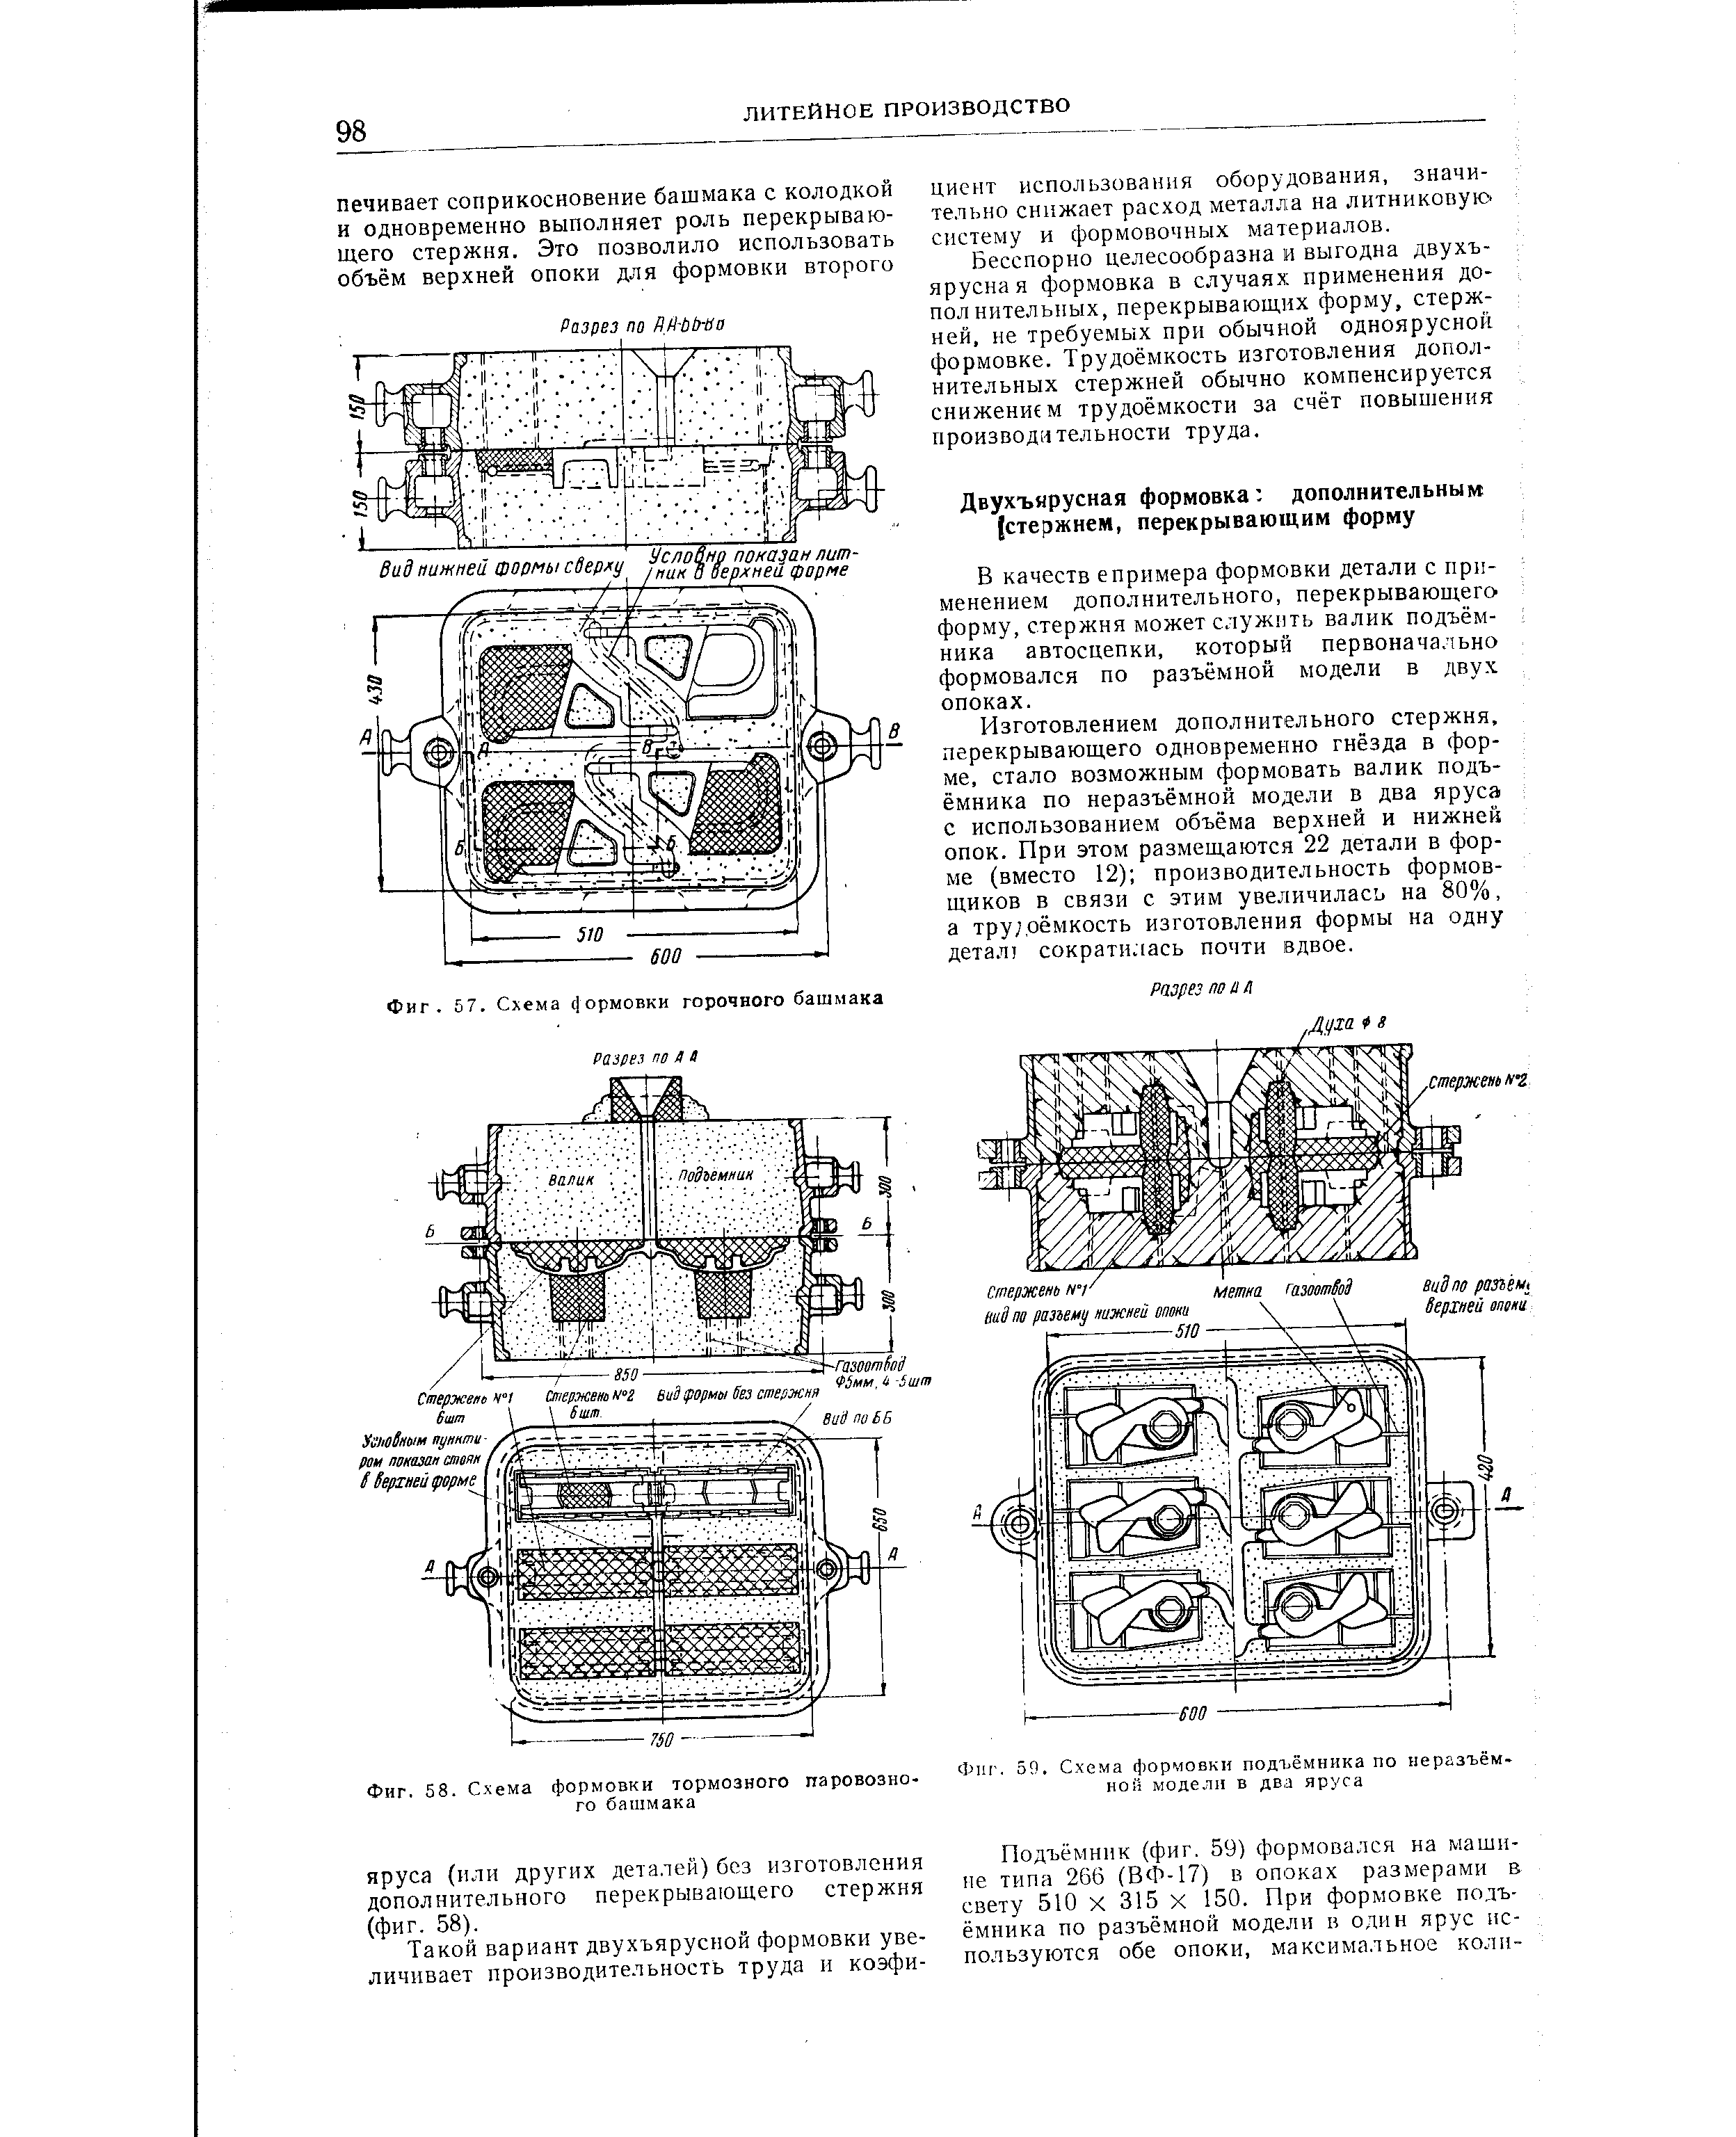 Фиг. 58. Схема формовки тормозного паровозного башмака
